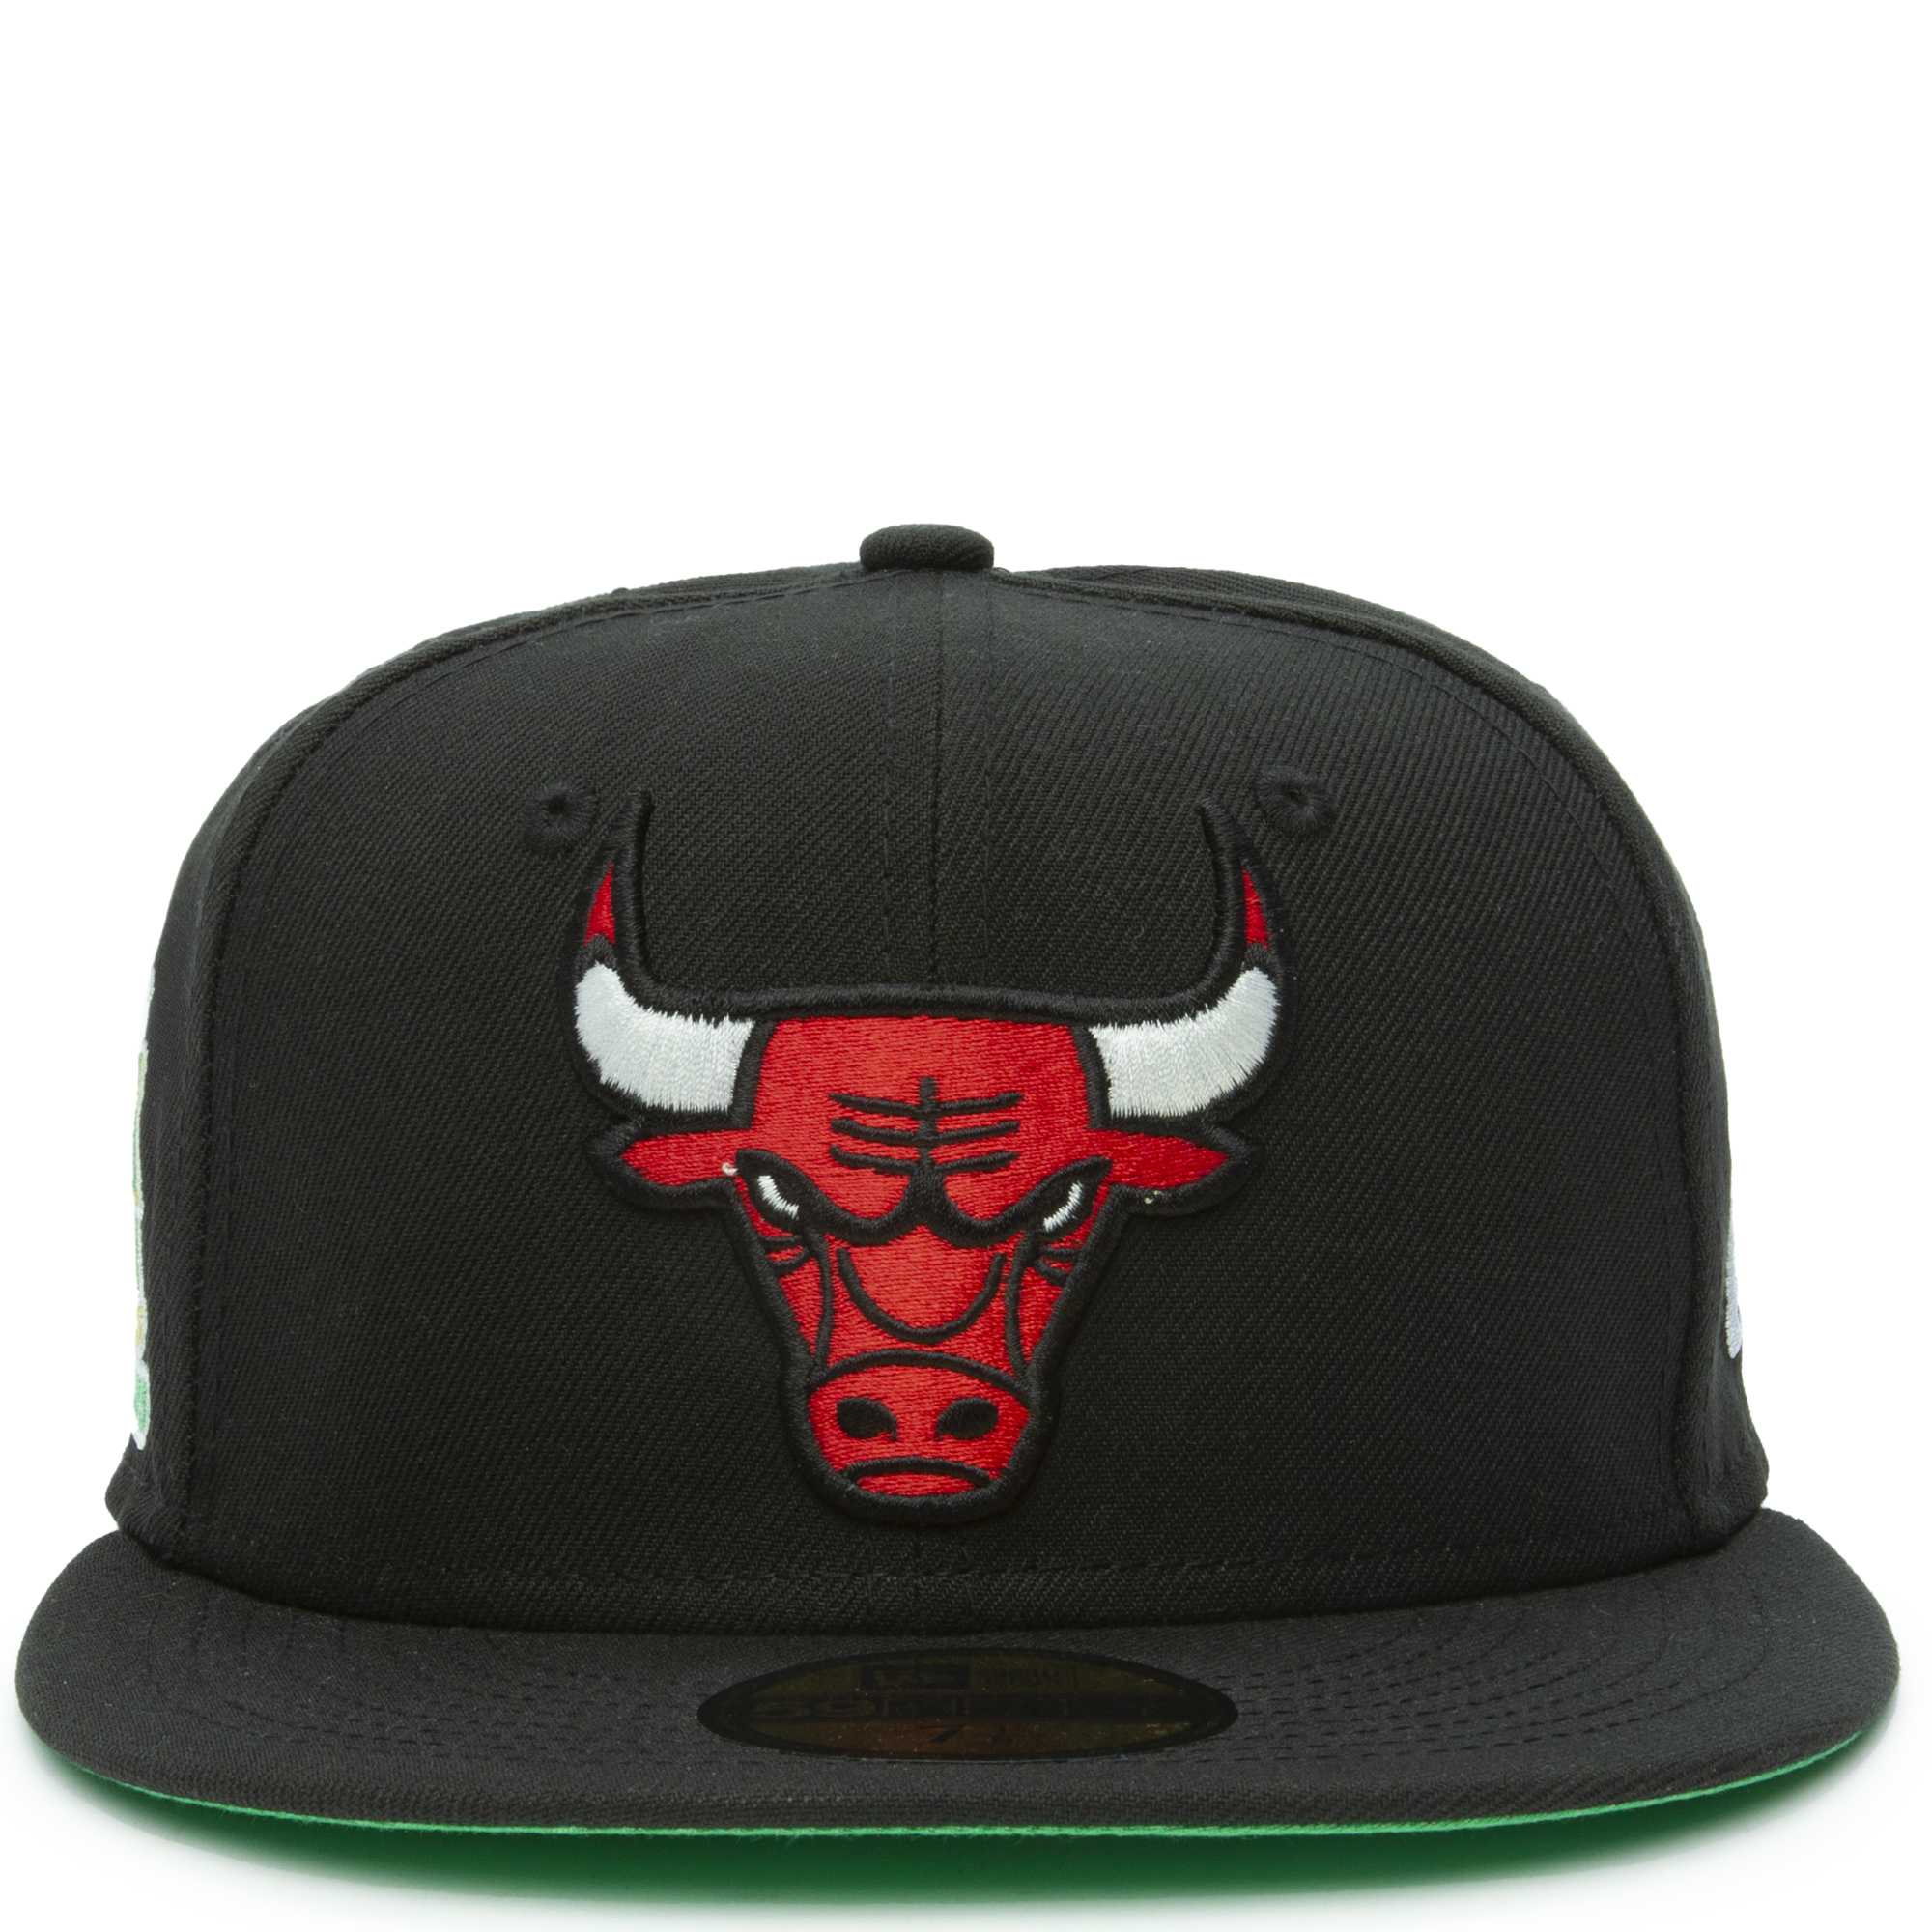 chicago bulls hat green